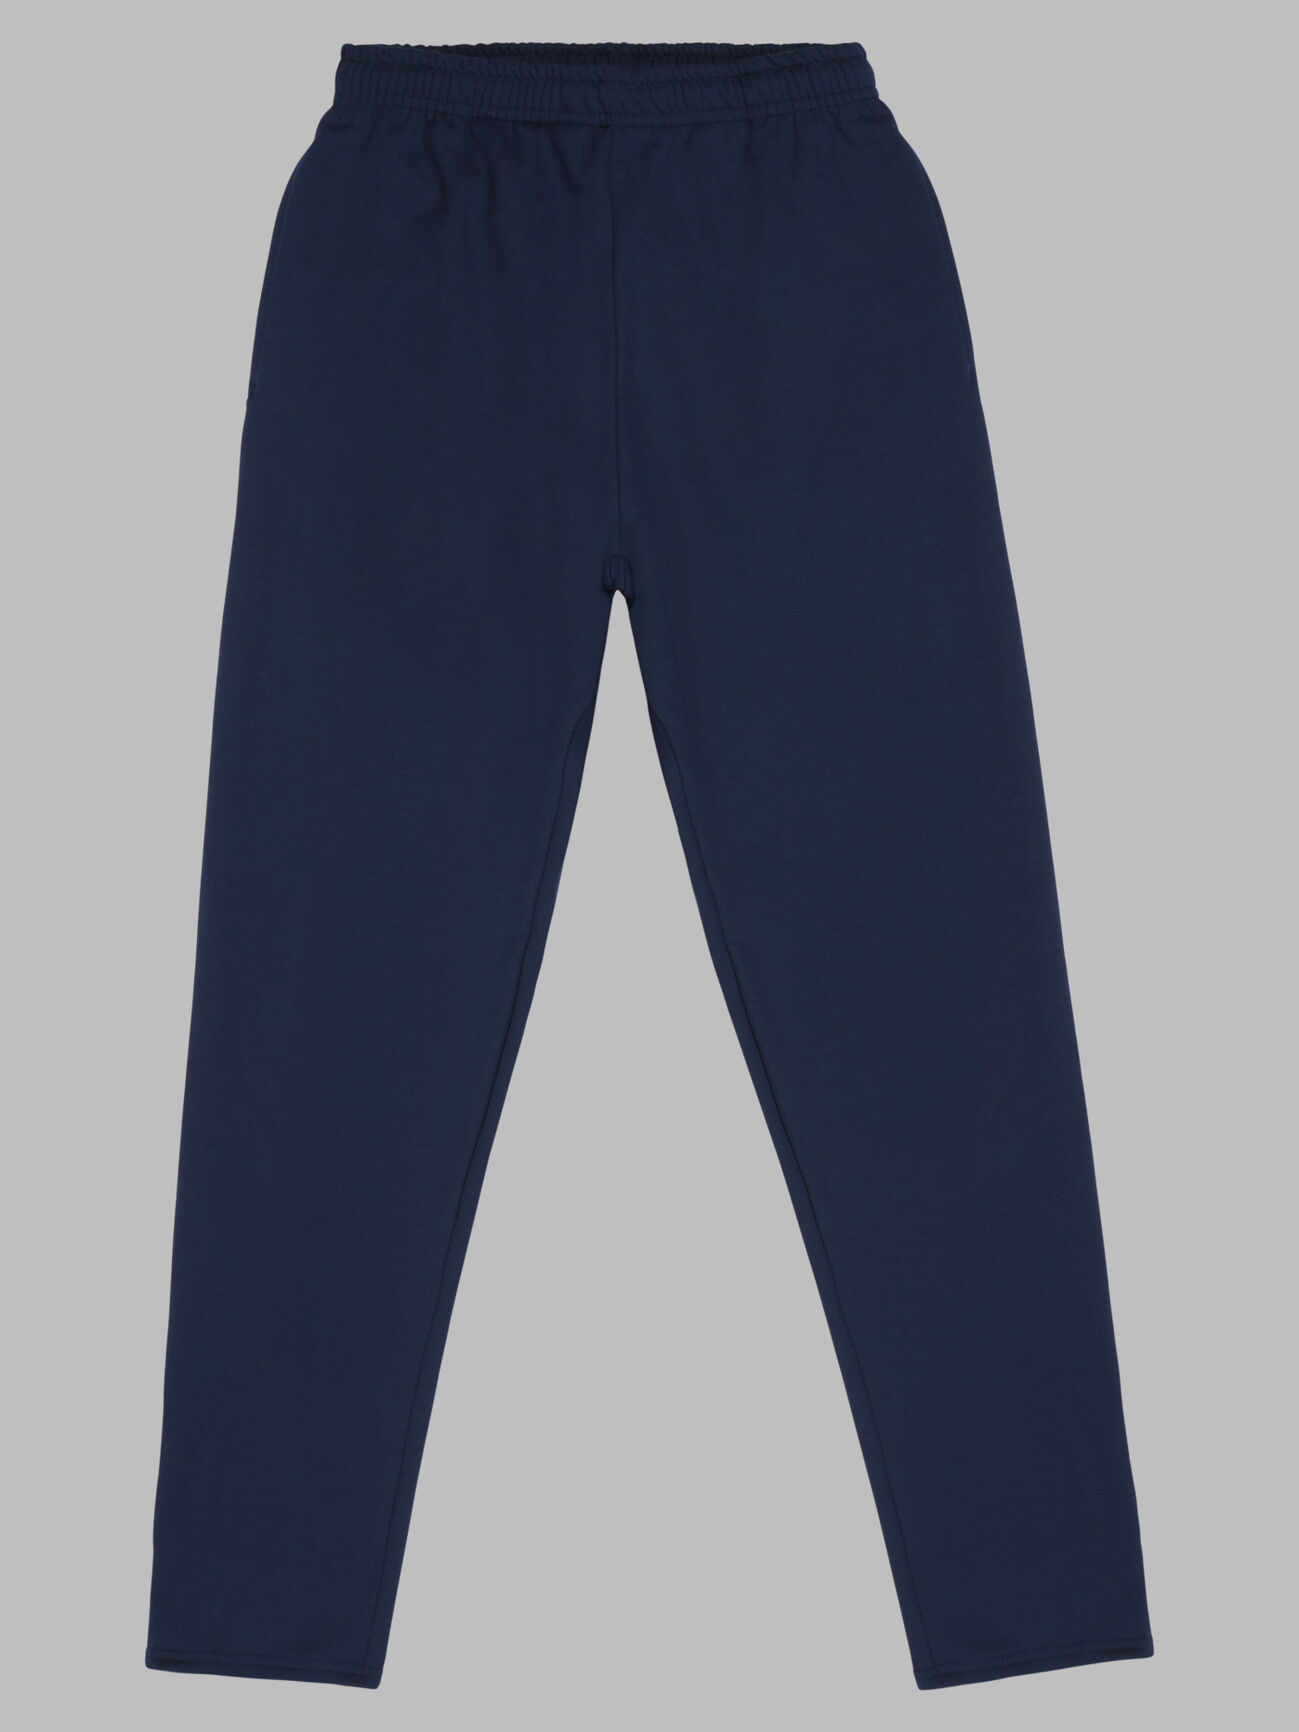 Men's Eversoft® Open Bottom Sweatpants, 2XL